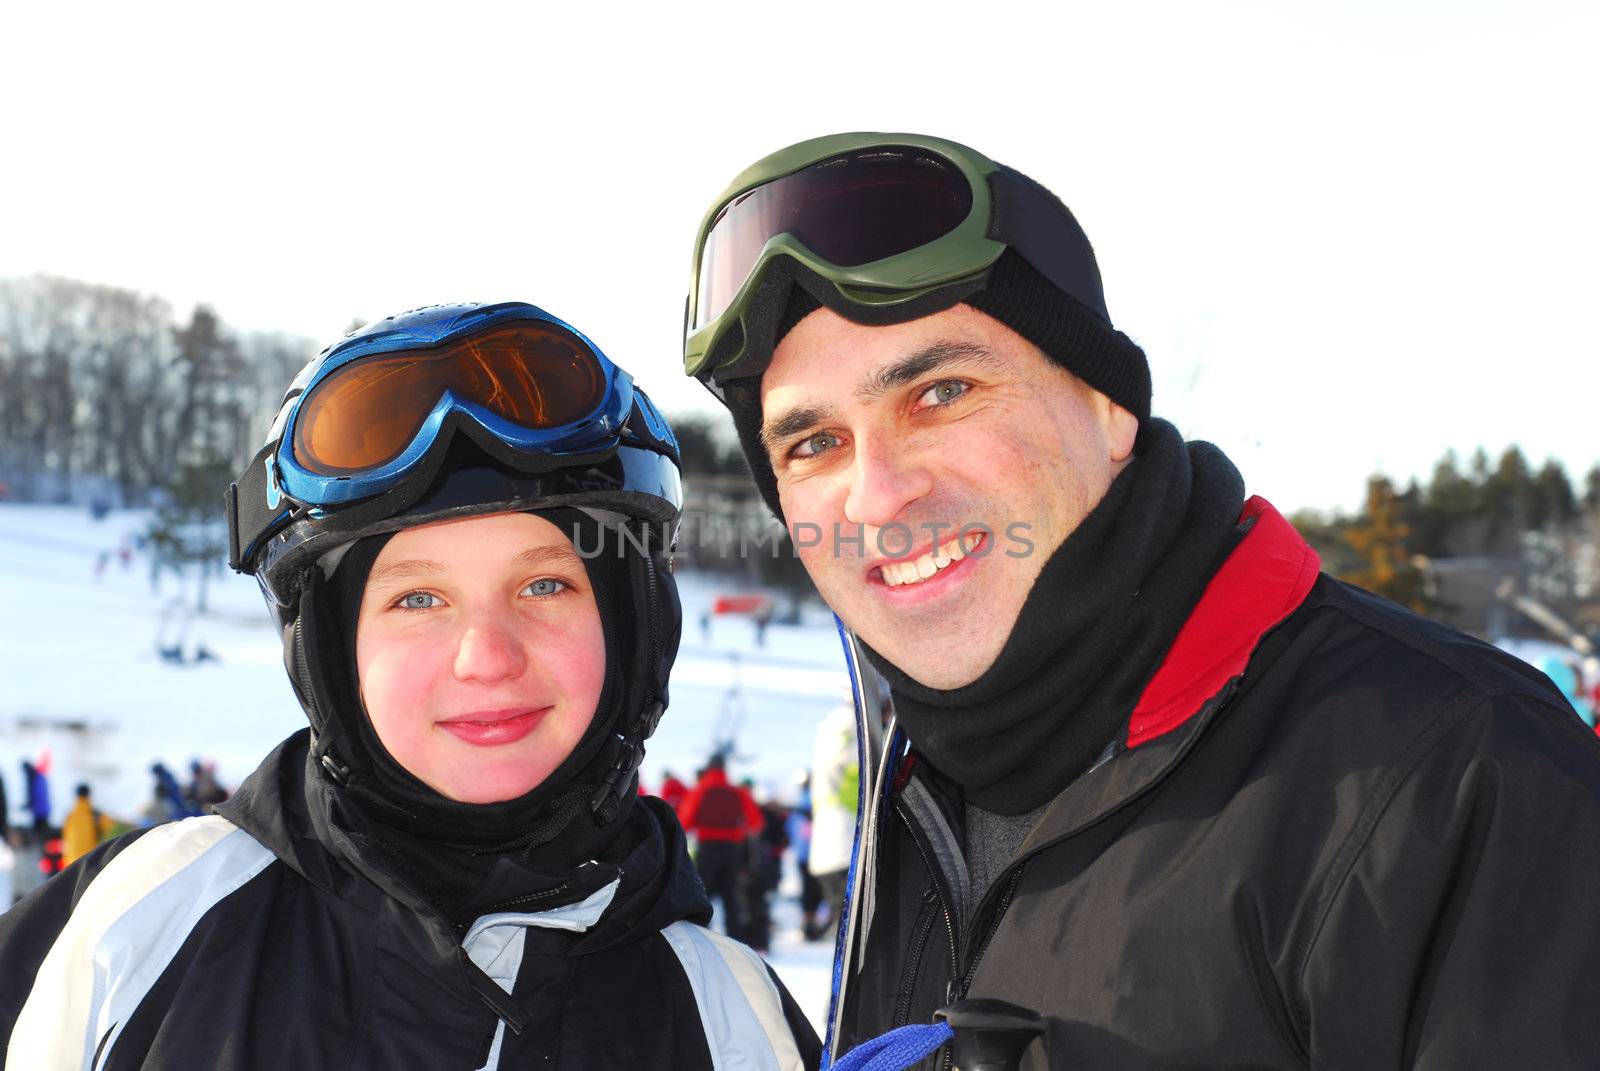 Portrait of a happy family on downhill ski resort